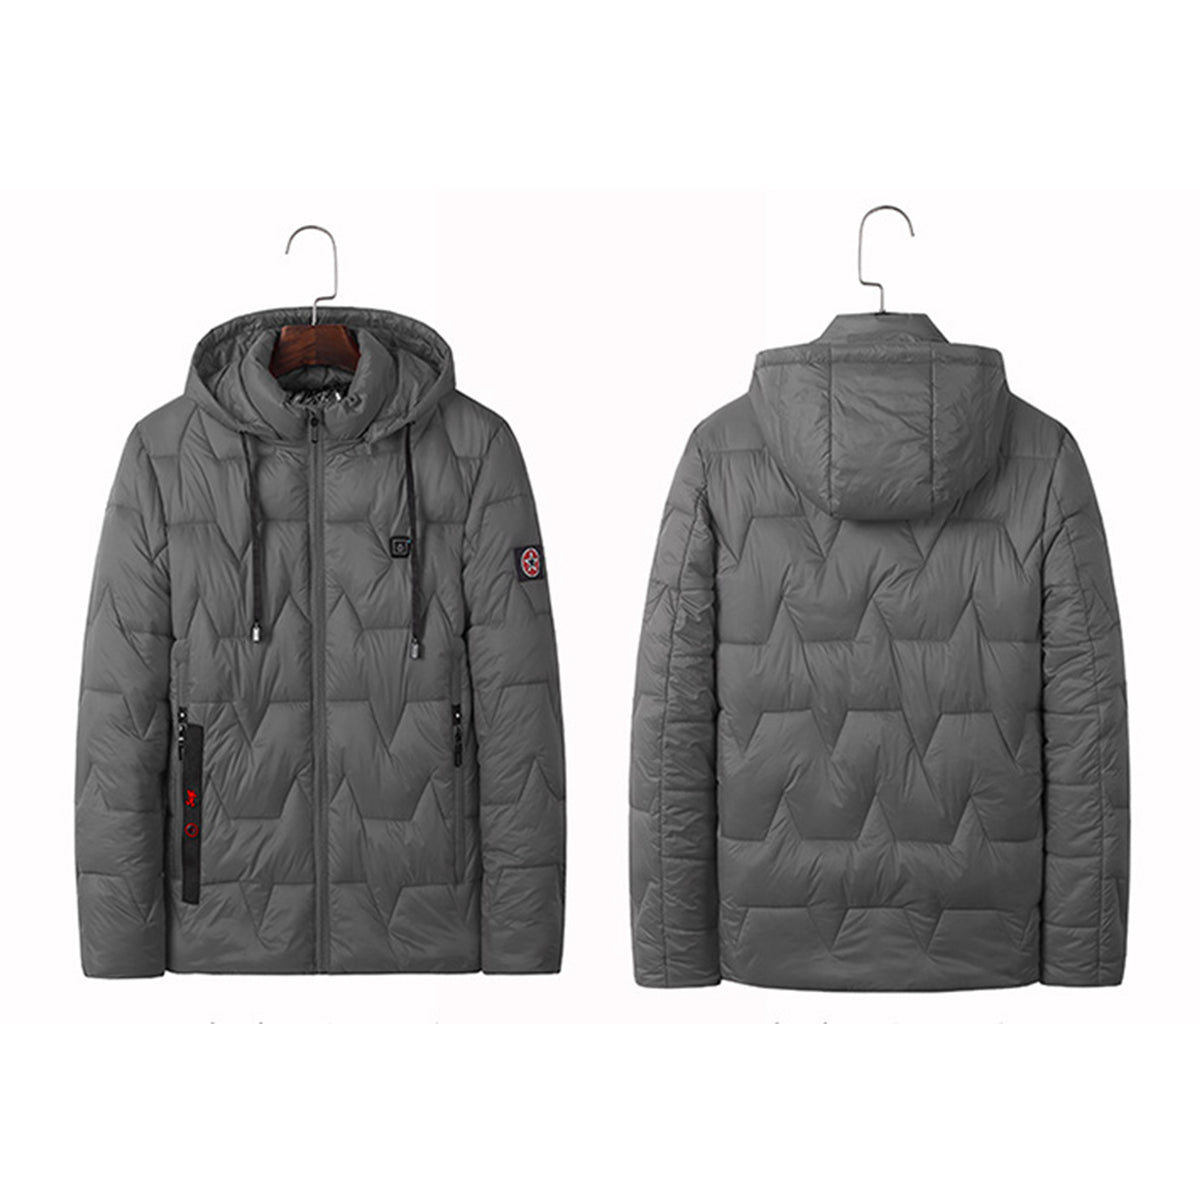 Dim Gray USB Electric Heated Coats Heating Hooded Jacket Long Sleeves Winter Warm Clothing